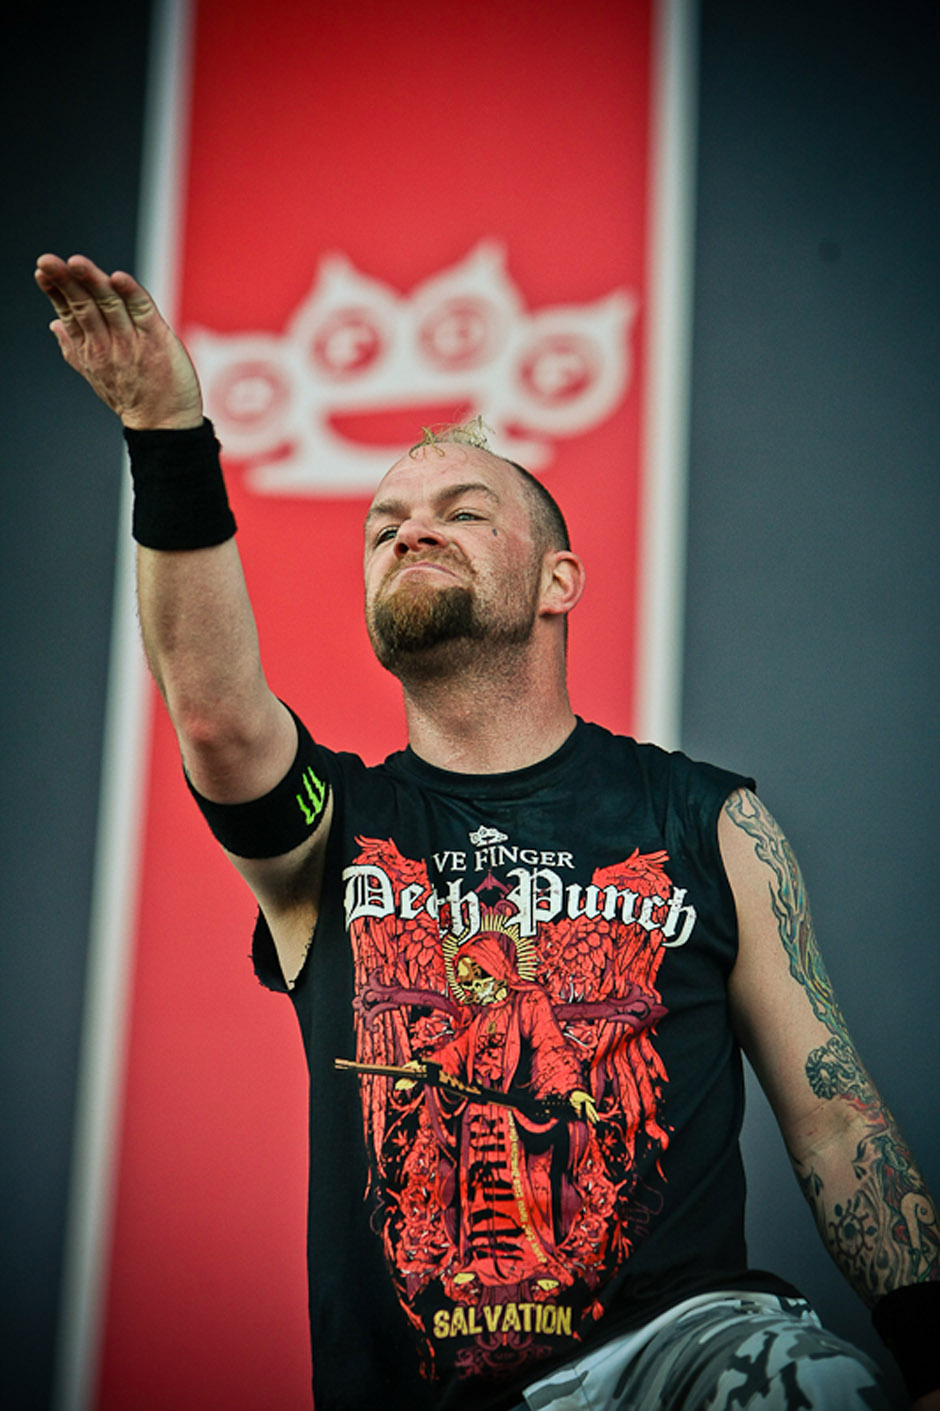 Five FInger Death Punch live, Nova Rock 2013